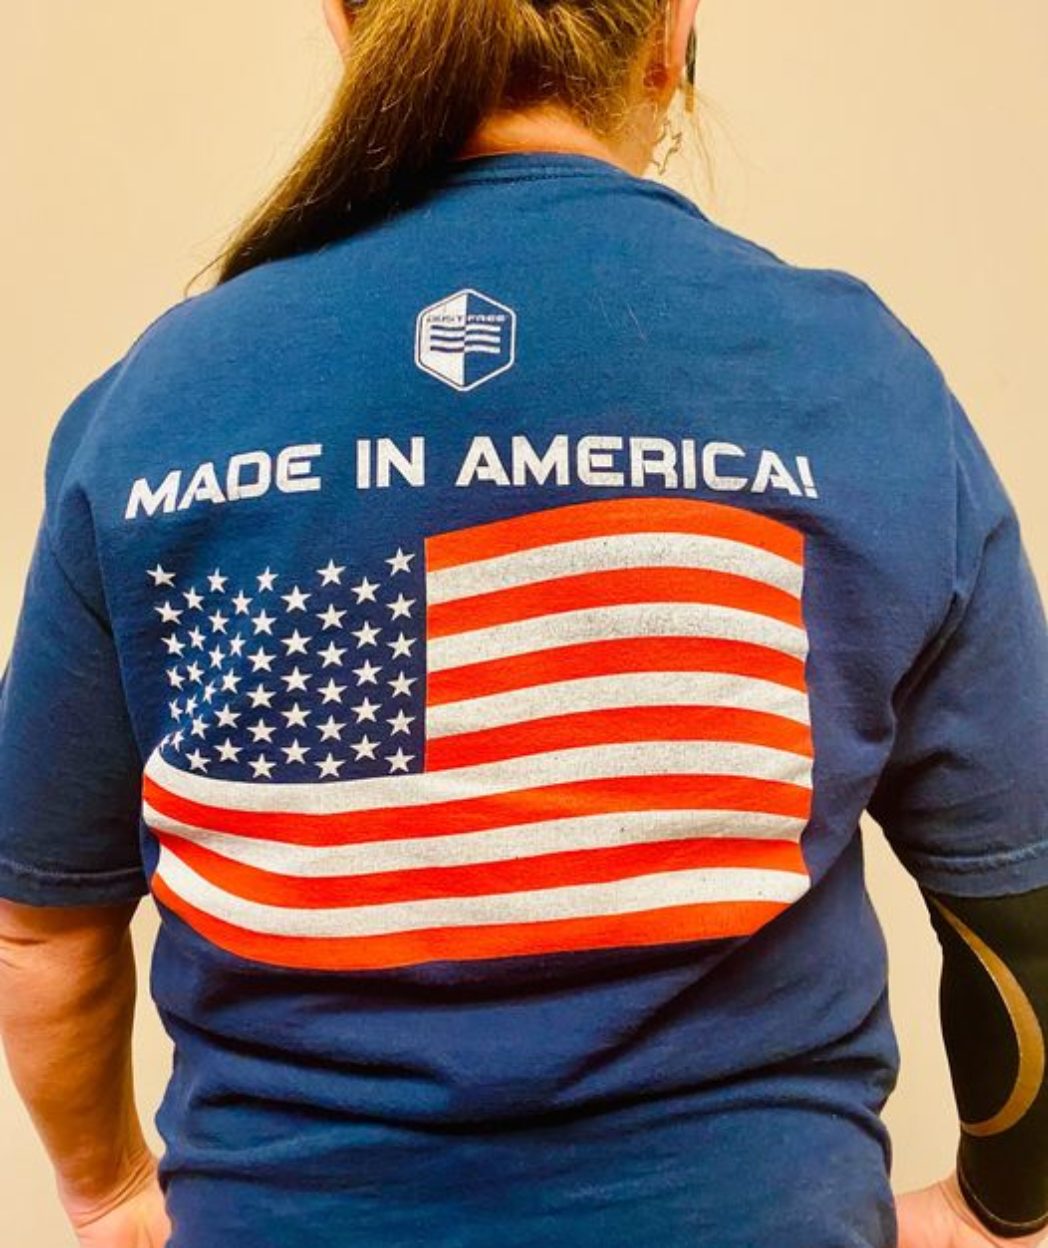 Woman wearing made in america shirt.